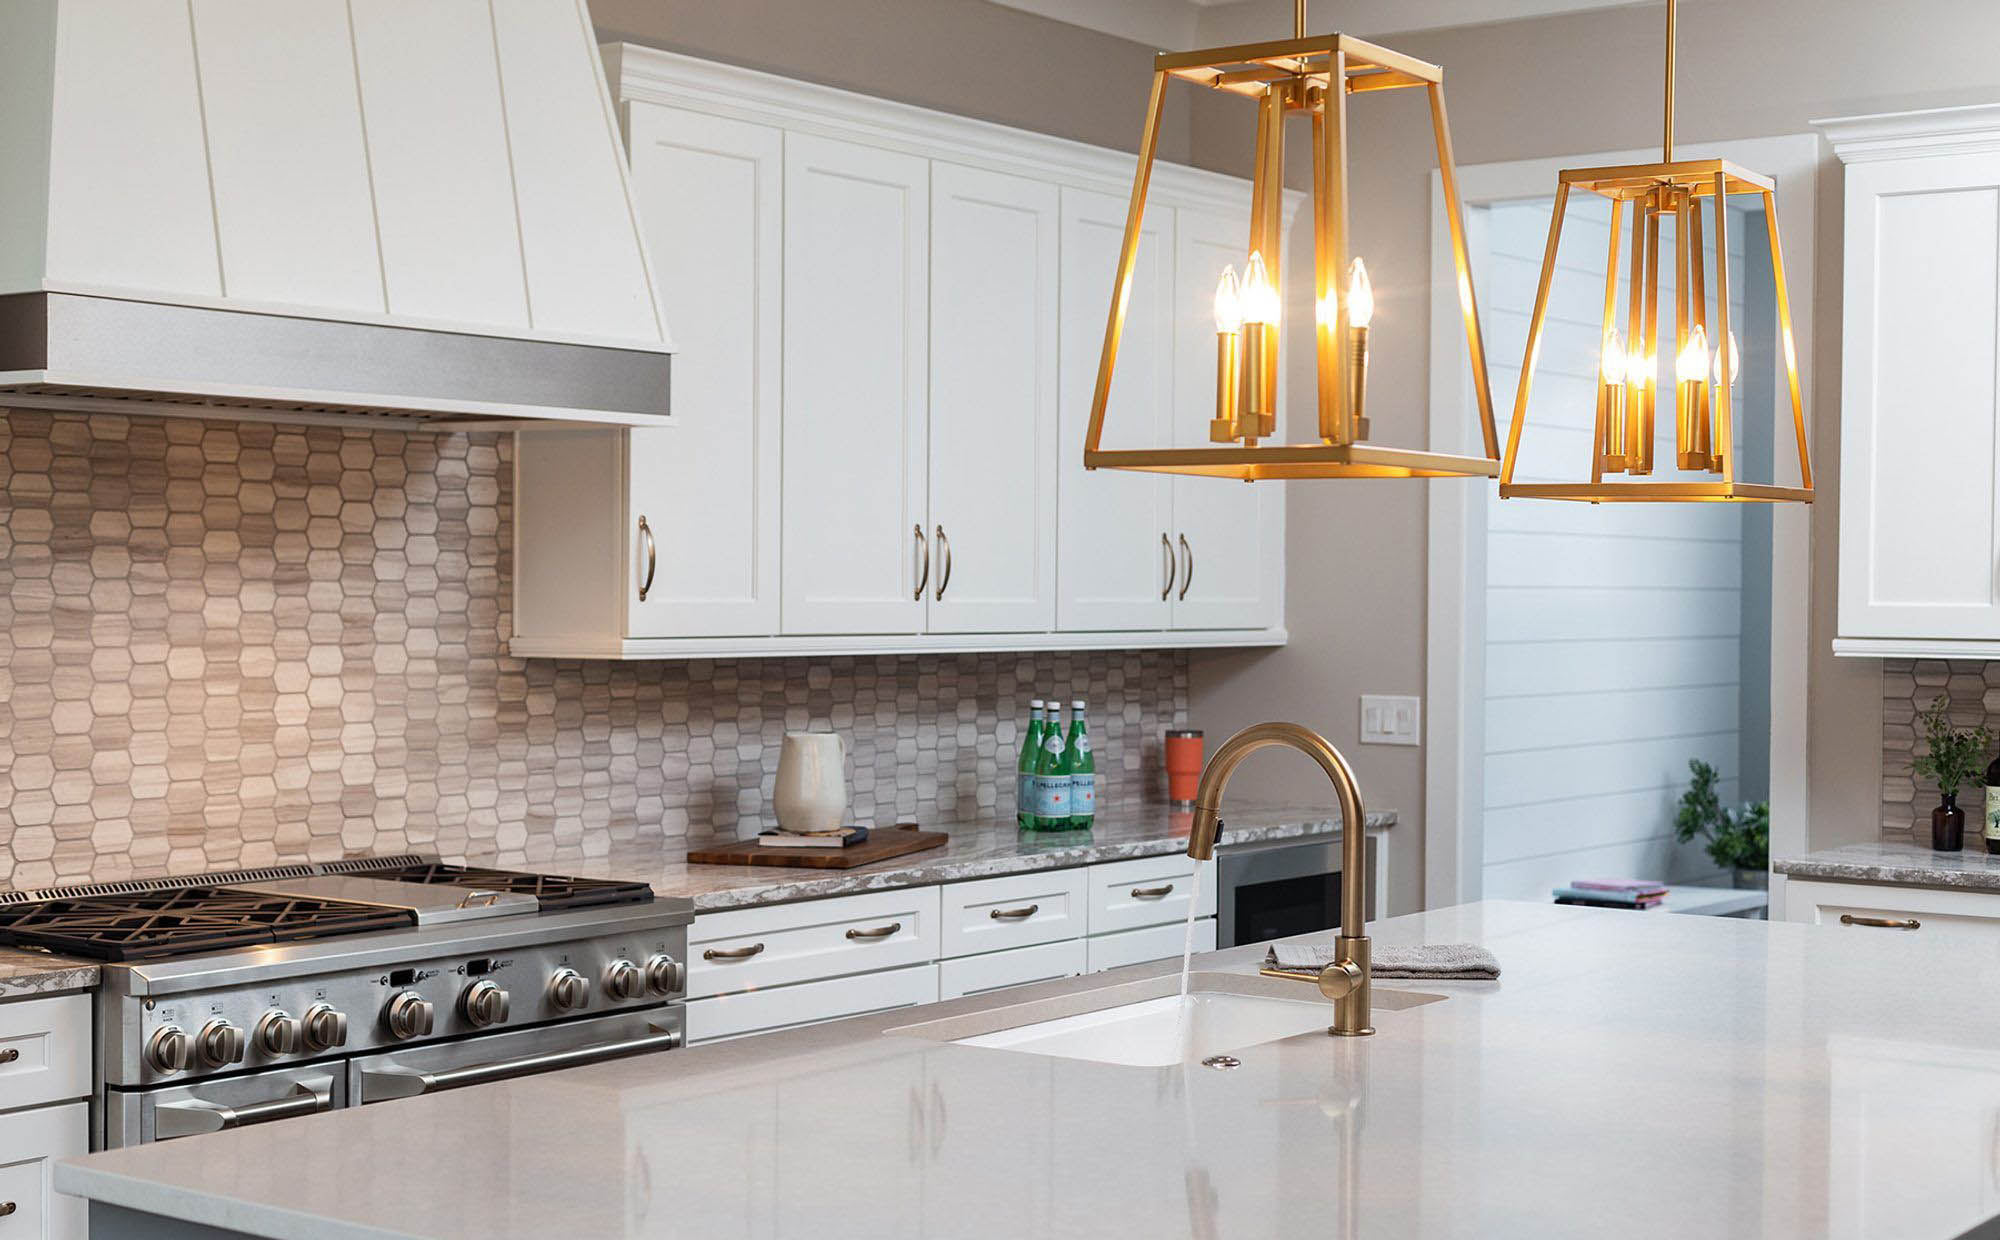 Quartz kitchen countertops with a cream color. Gold metallic finishes. quartz vs granite. 